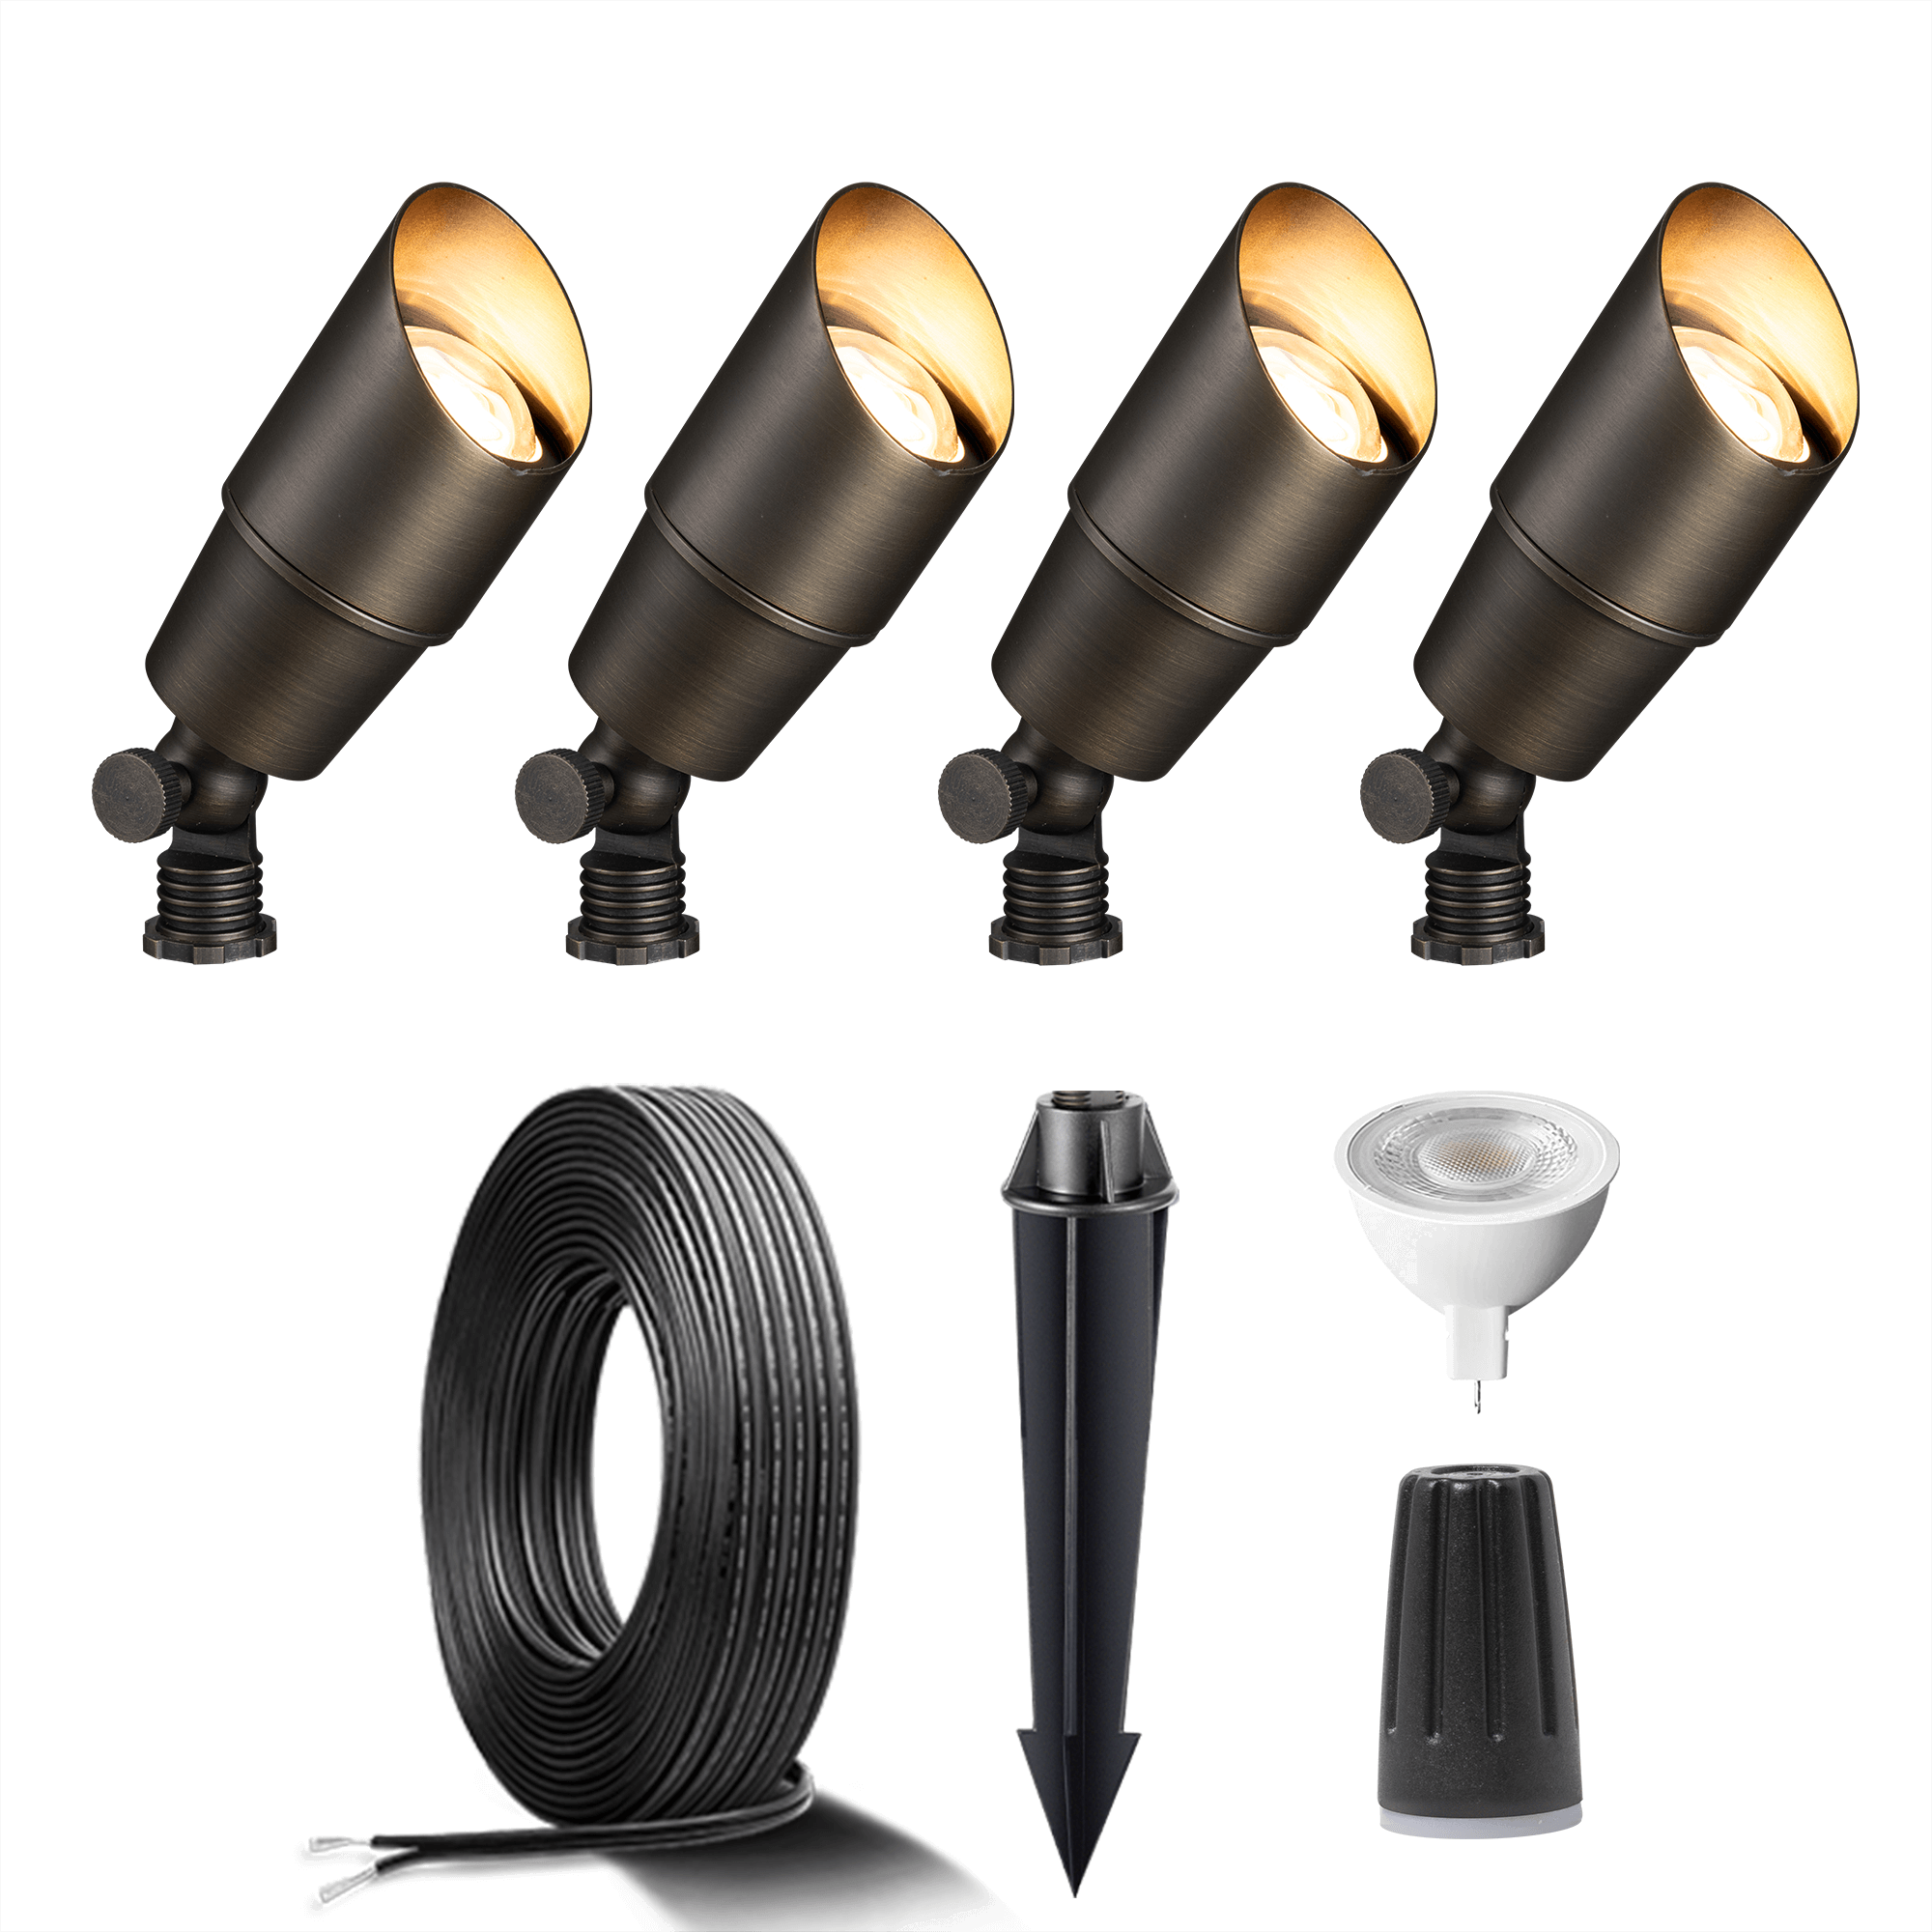 Coloer Die-Cast Brass Landscape Spotlights, 12 Pack Landscape Light Fixture with MR16 LED Bulb Kit Ground Stake Included,12V AC/DC Low Voltage Outdoor